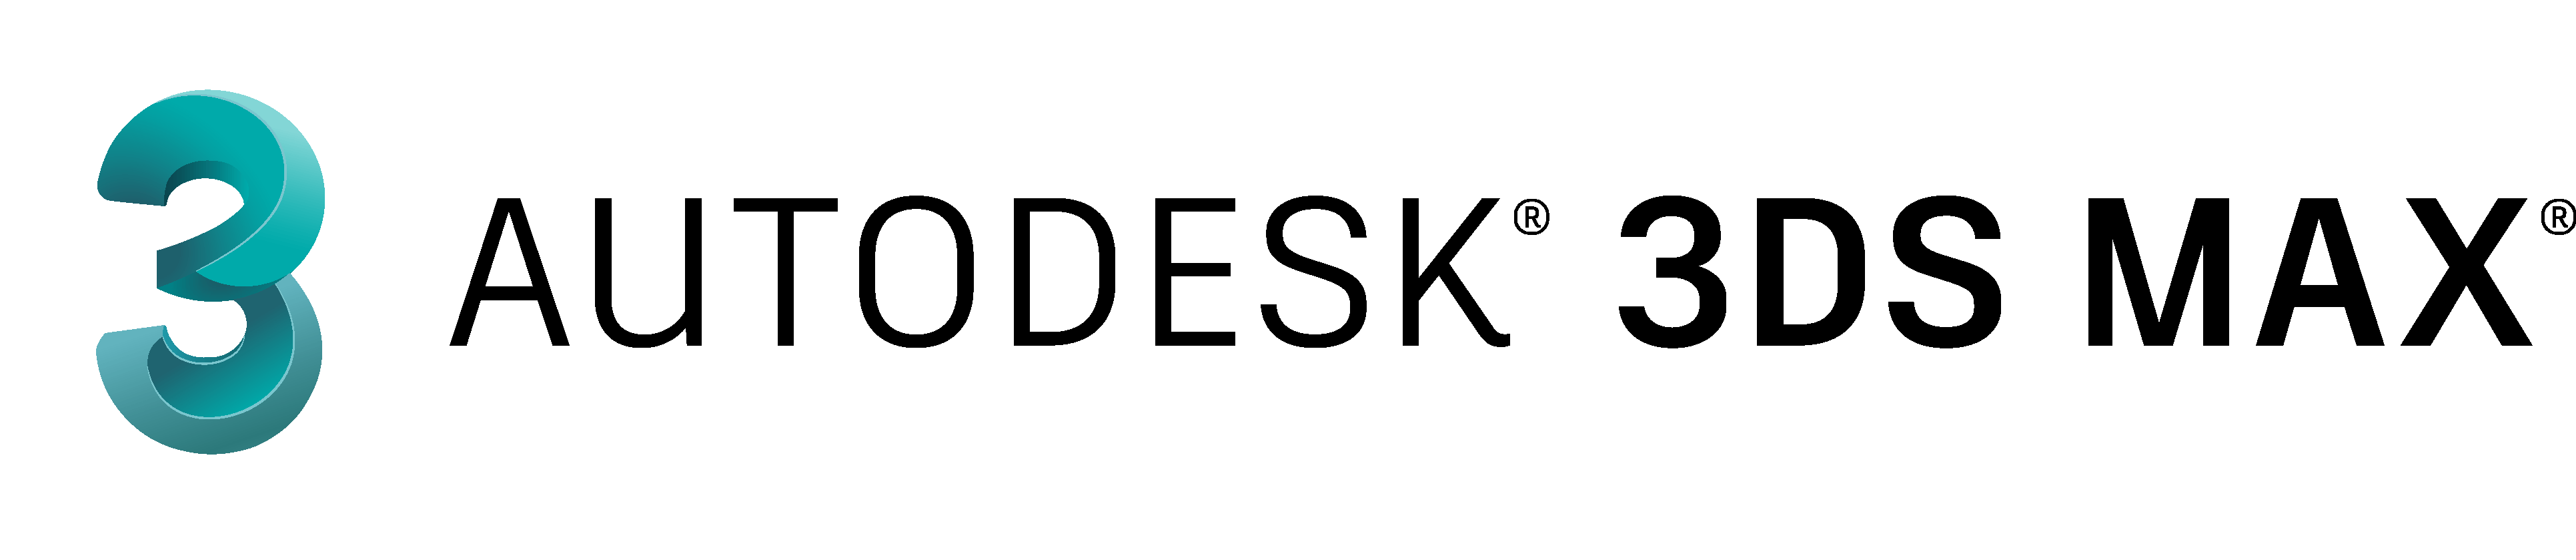 Autodesk 3d Max logo. 3ds Max логотип. Autodesk 3ds Max лого. Значок 3ds Max 2021.